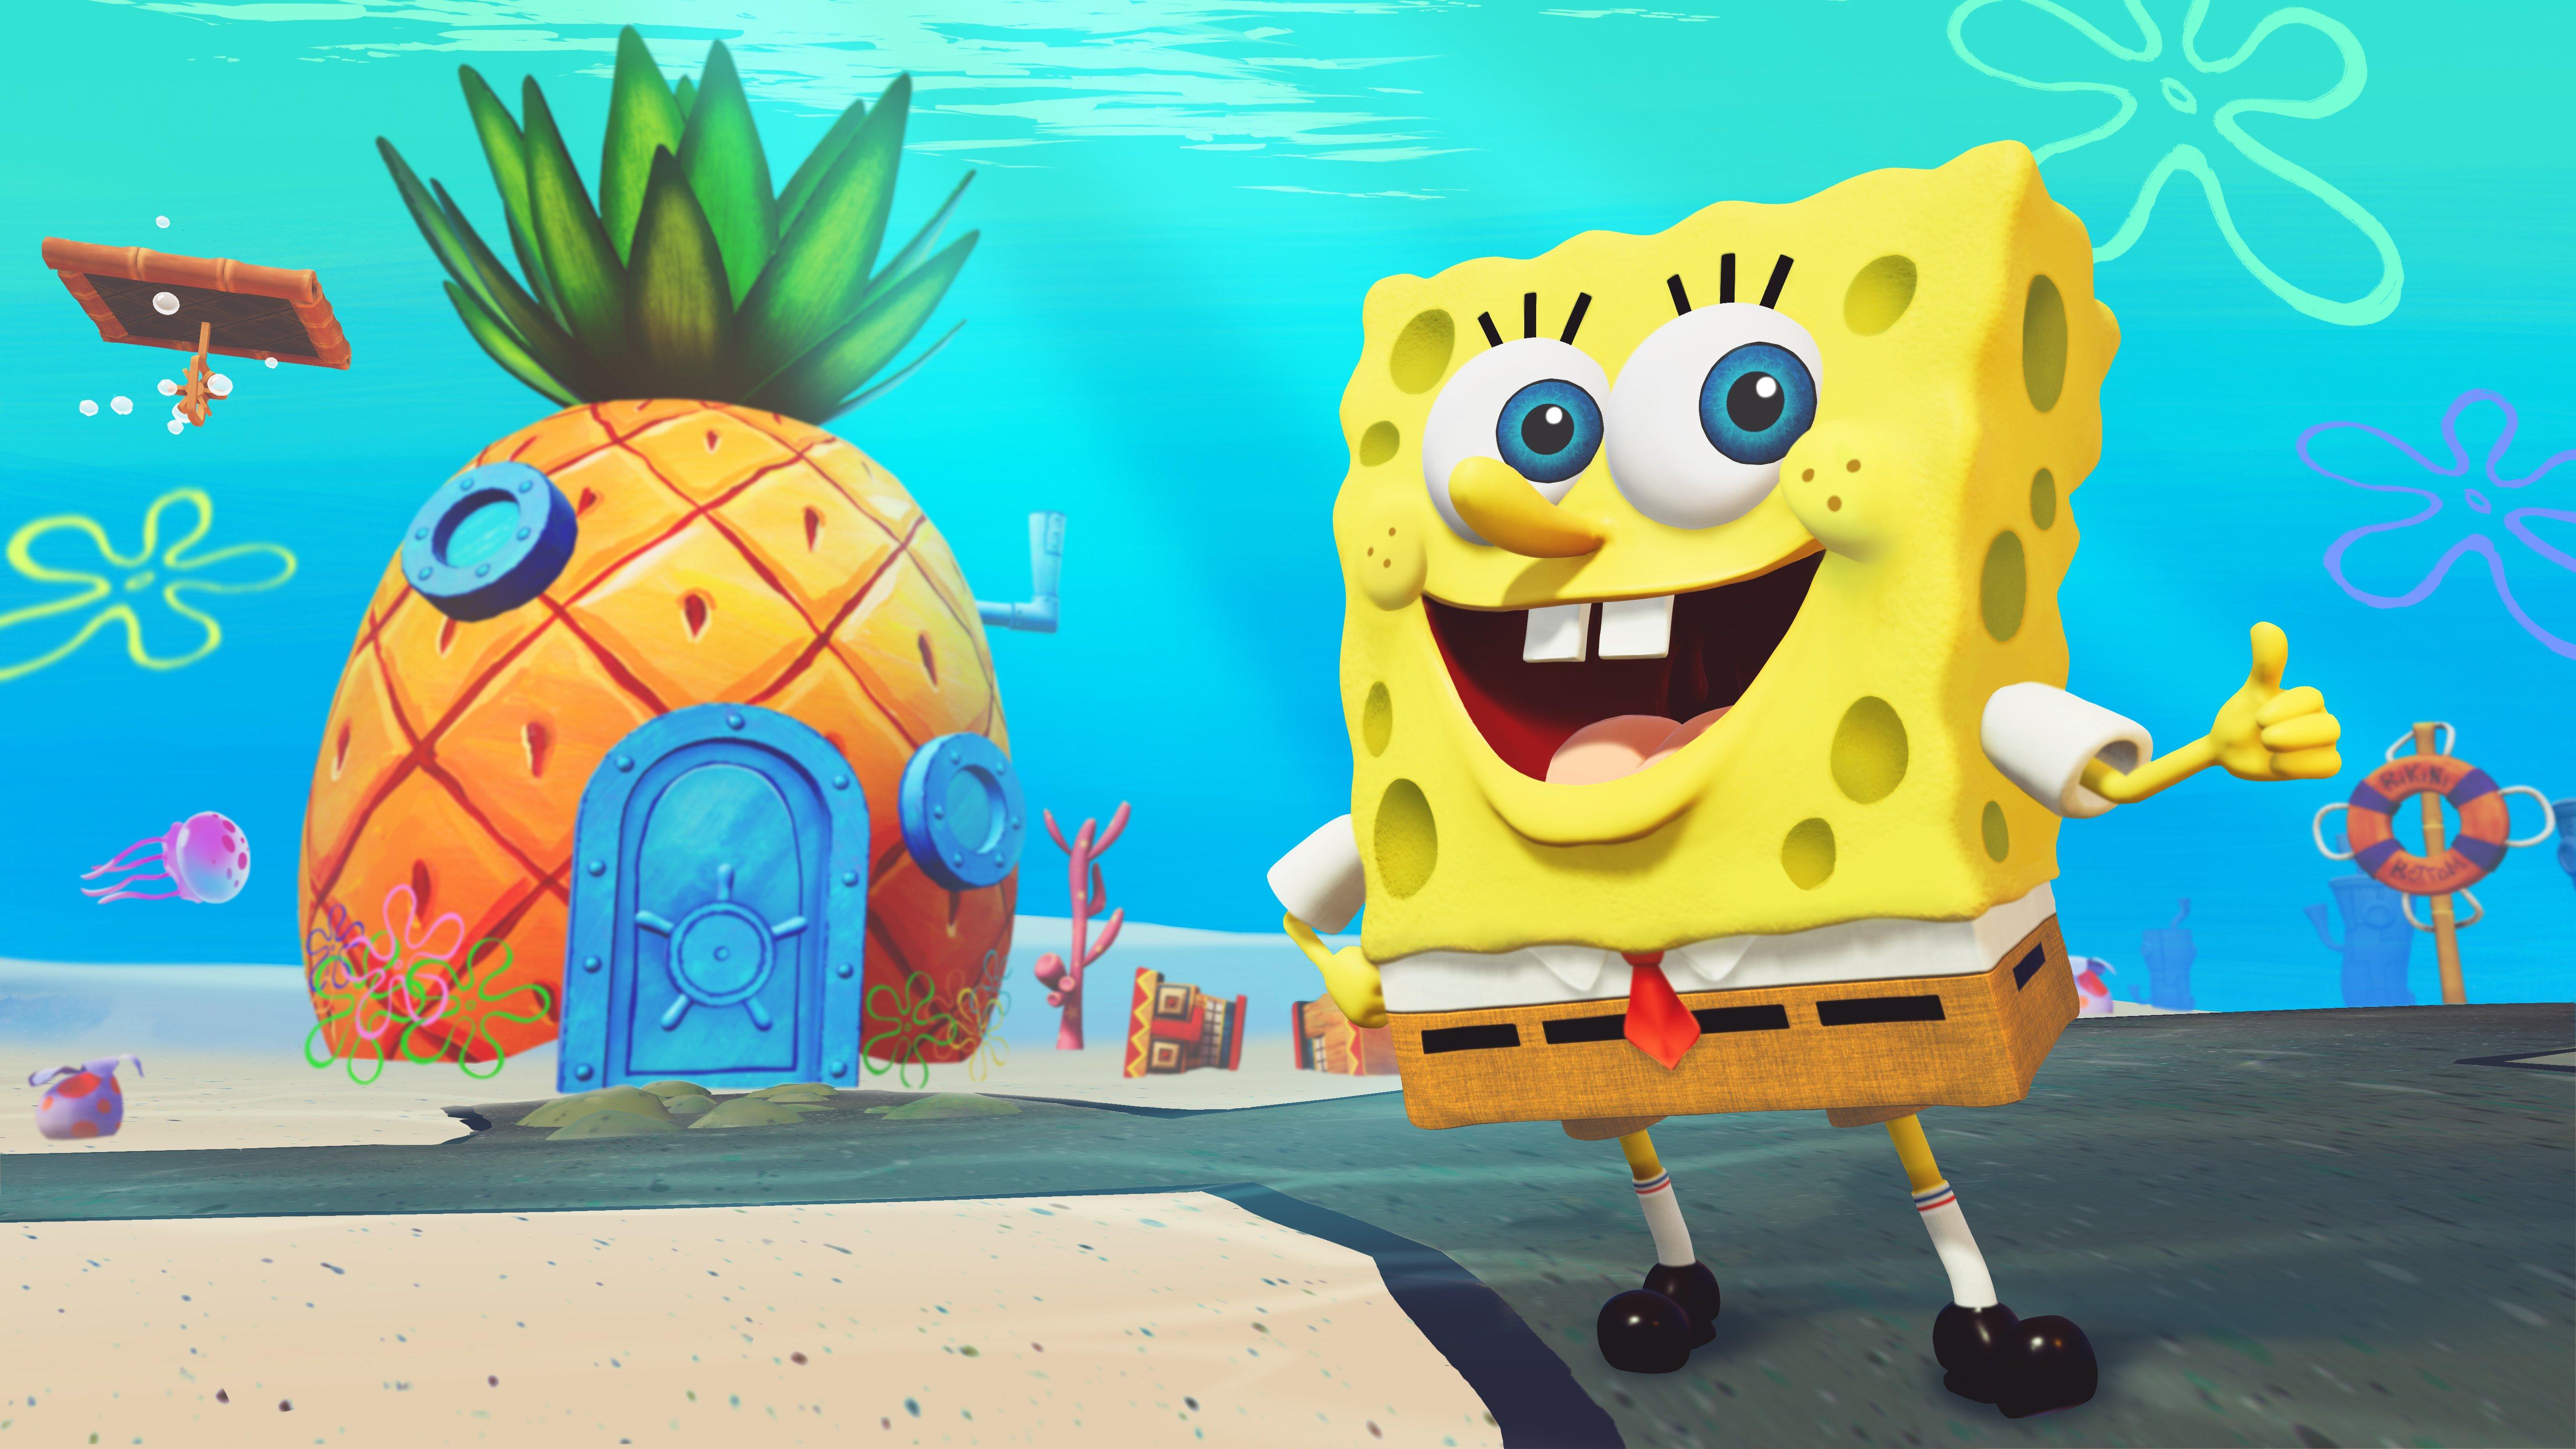 spongebob squarepants battle for bikini bottom rehydrated ps4 digital